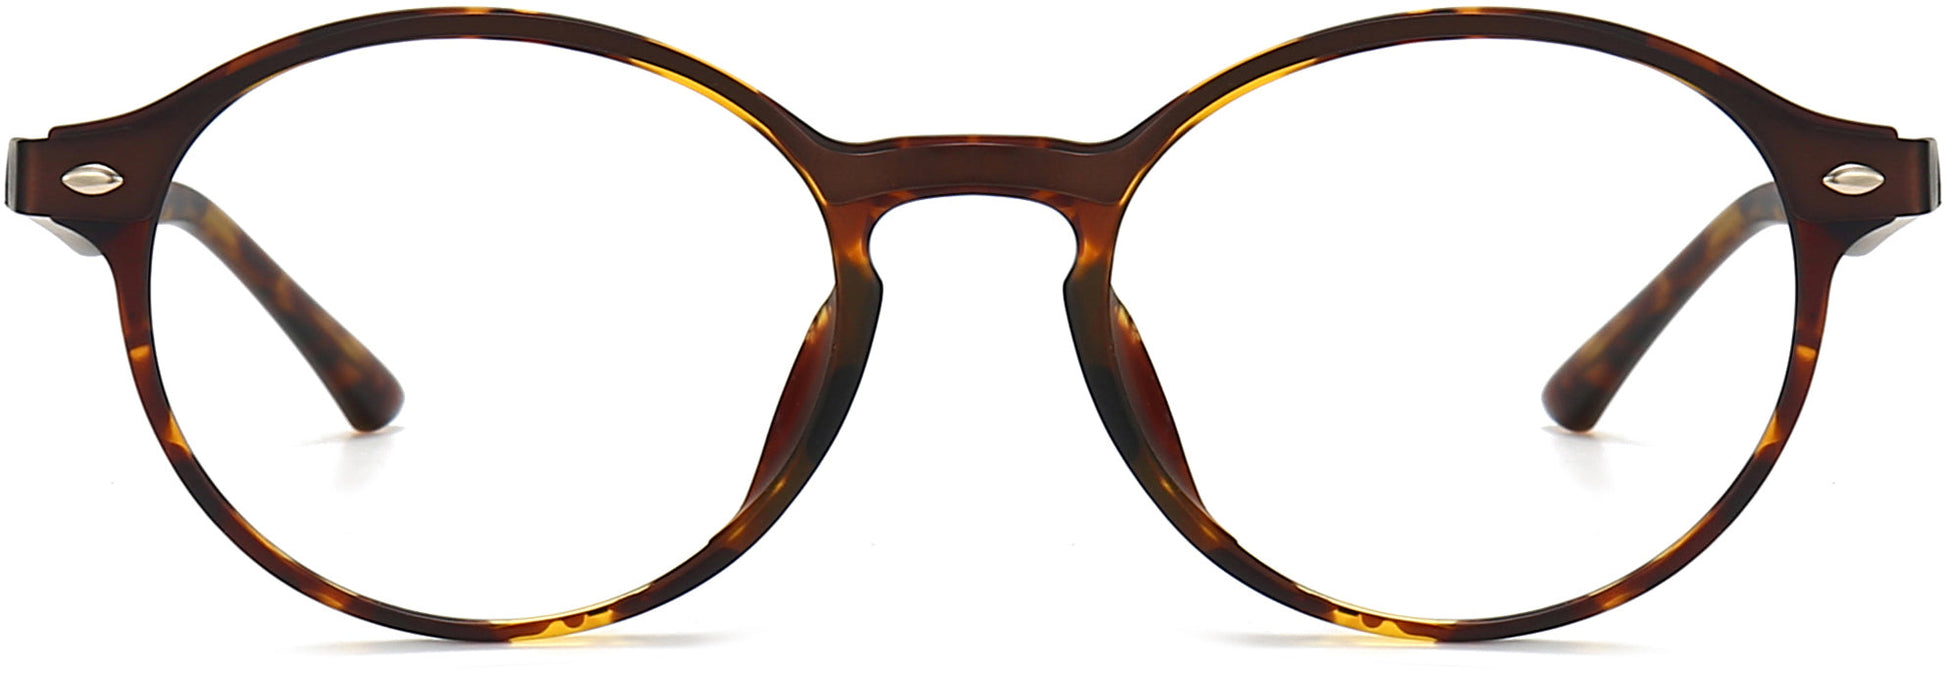 Ensley Round Tortoise Eyeglasses from ANRRI, front view